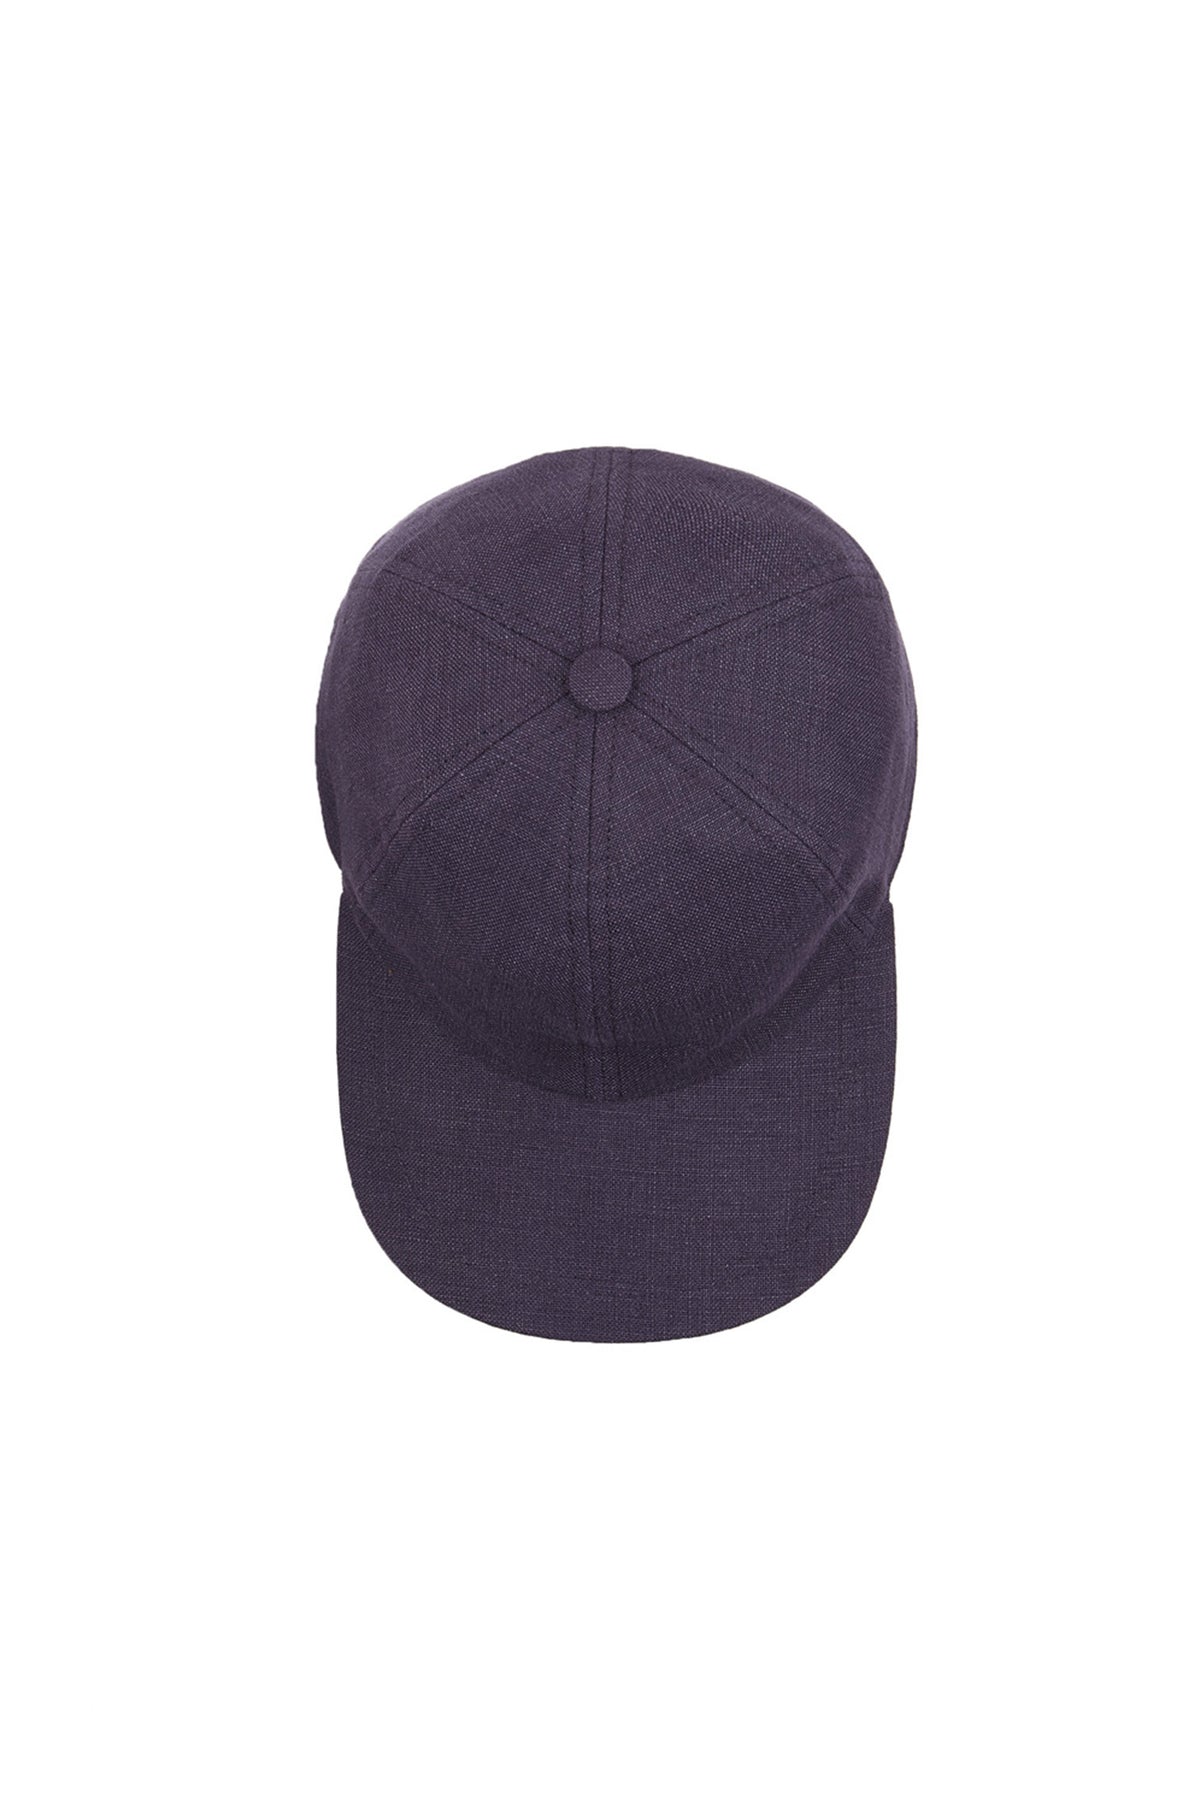 Rimini Baseball Cap - Lock & Co. Hats for Men & Women